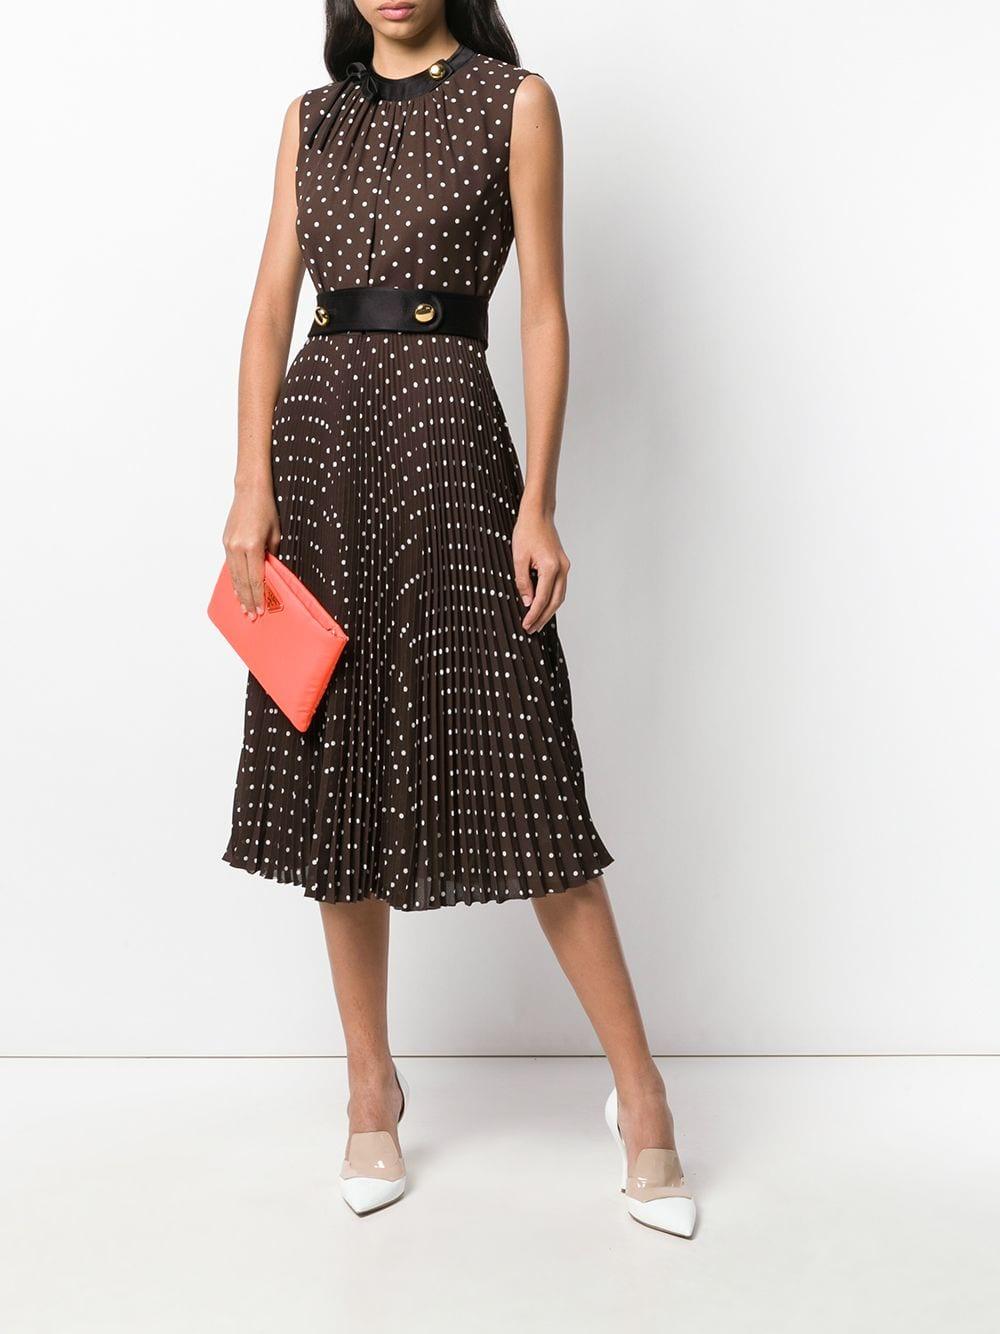 Prada Polka Dot Pleated Dress in Brown - Lyst